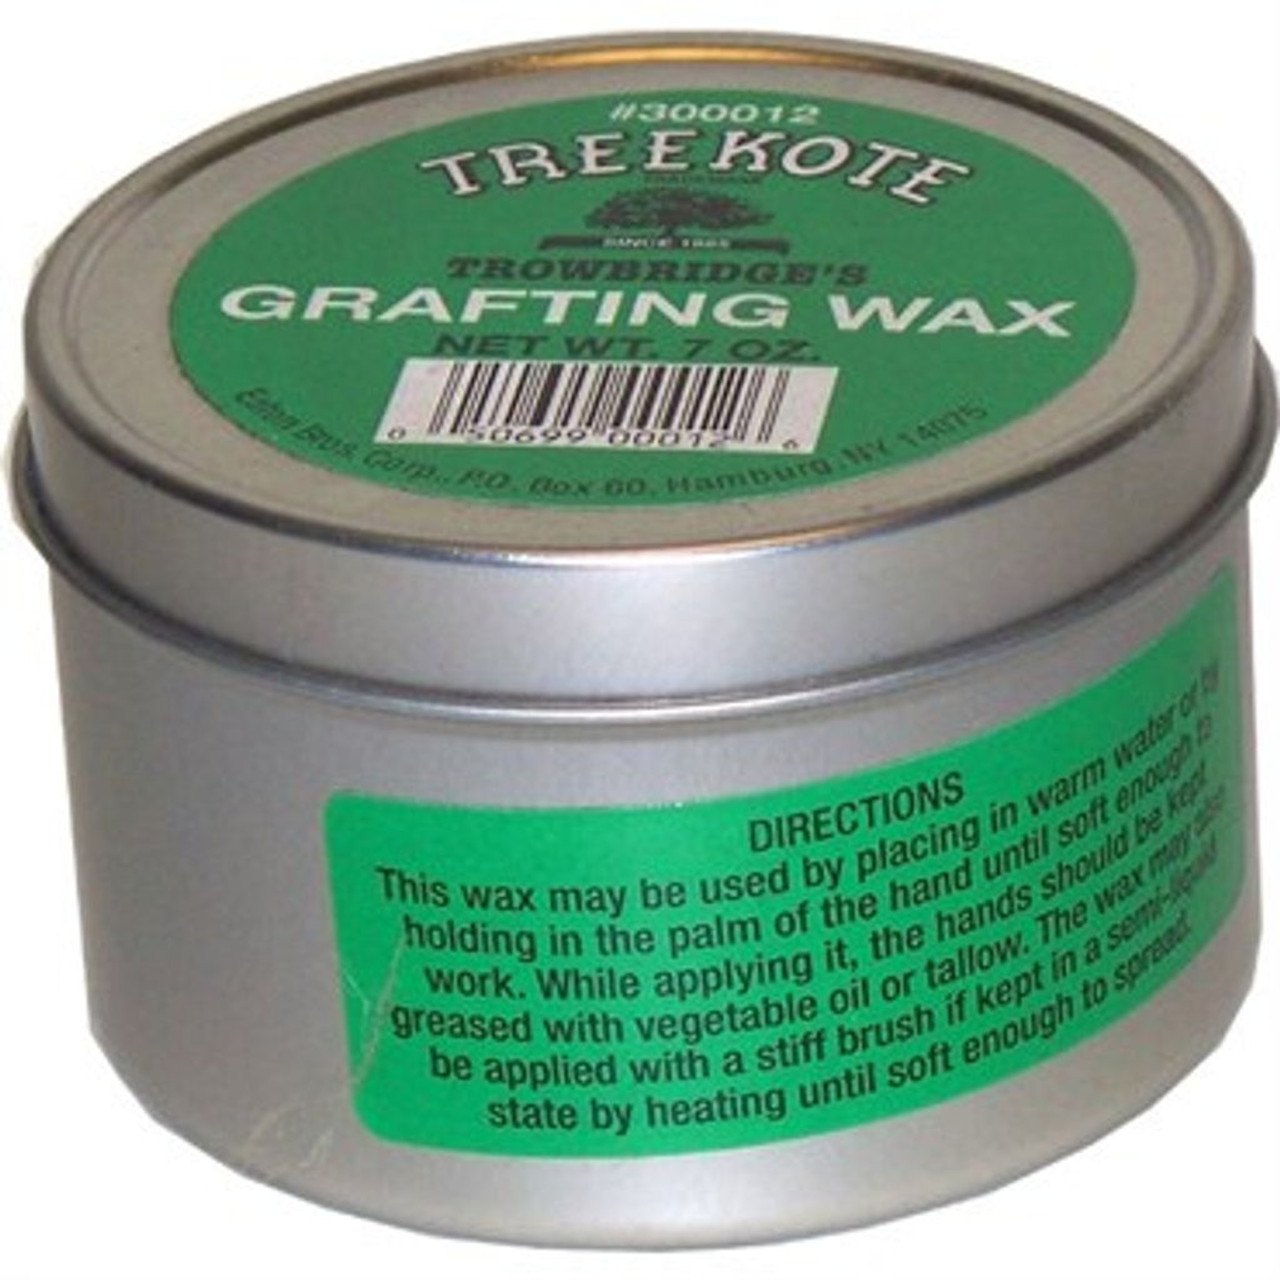 Trowbridge's Grafting Wax 7 oz. Walter E. Clark & Son